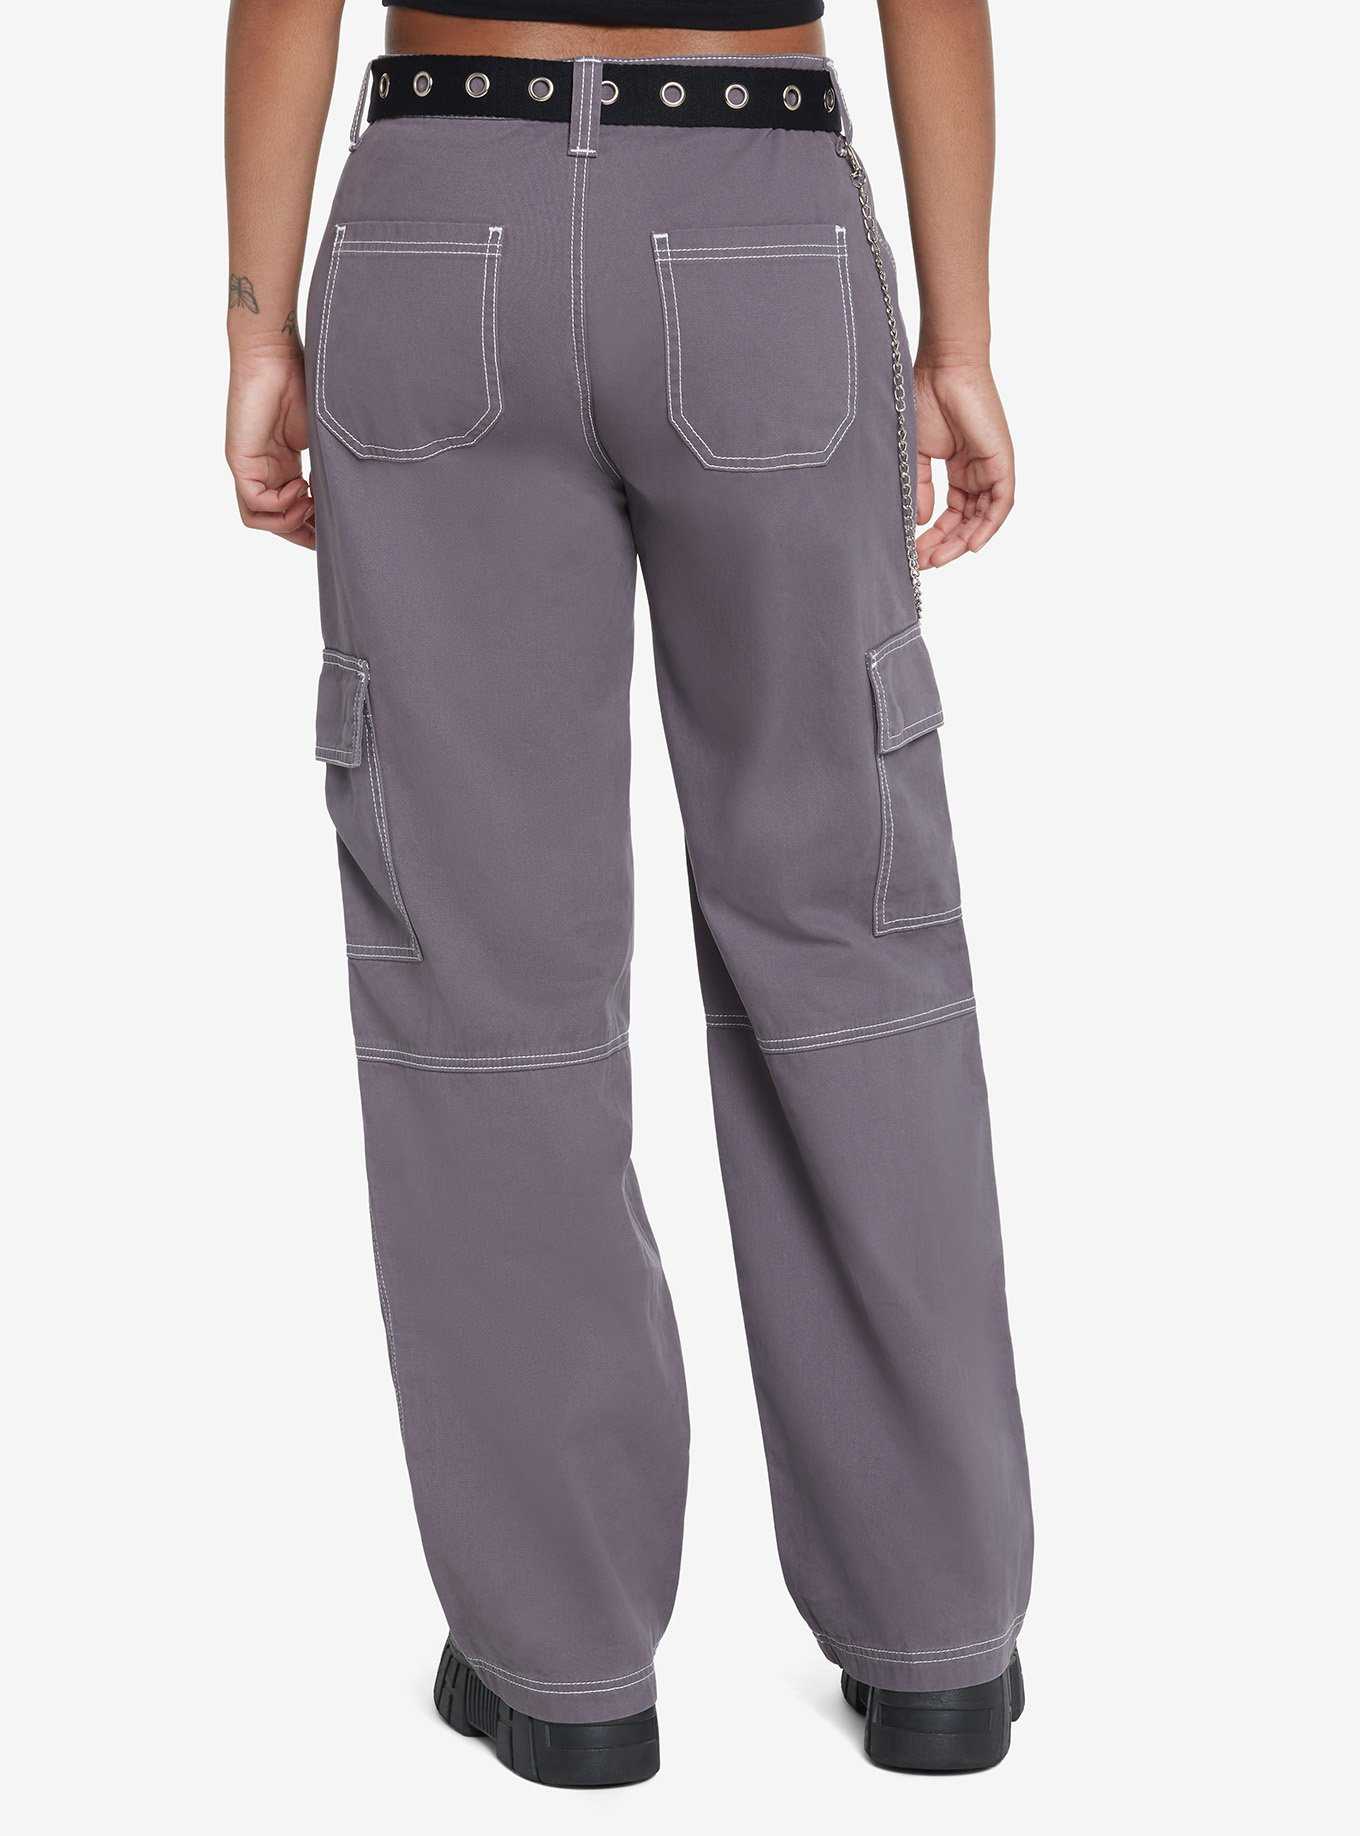 Grey Side Chain Carpenter Pants With Belt, , hi-res